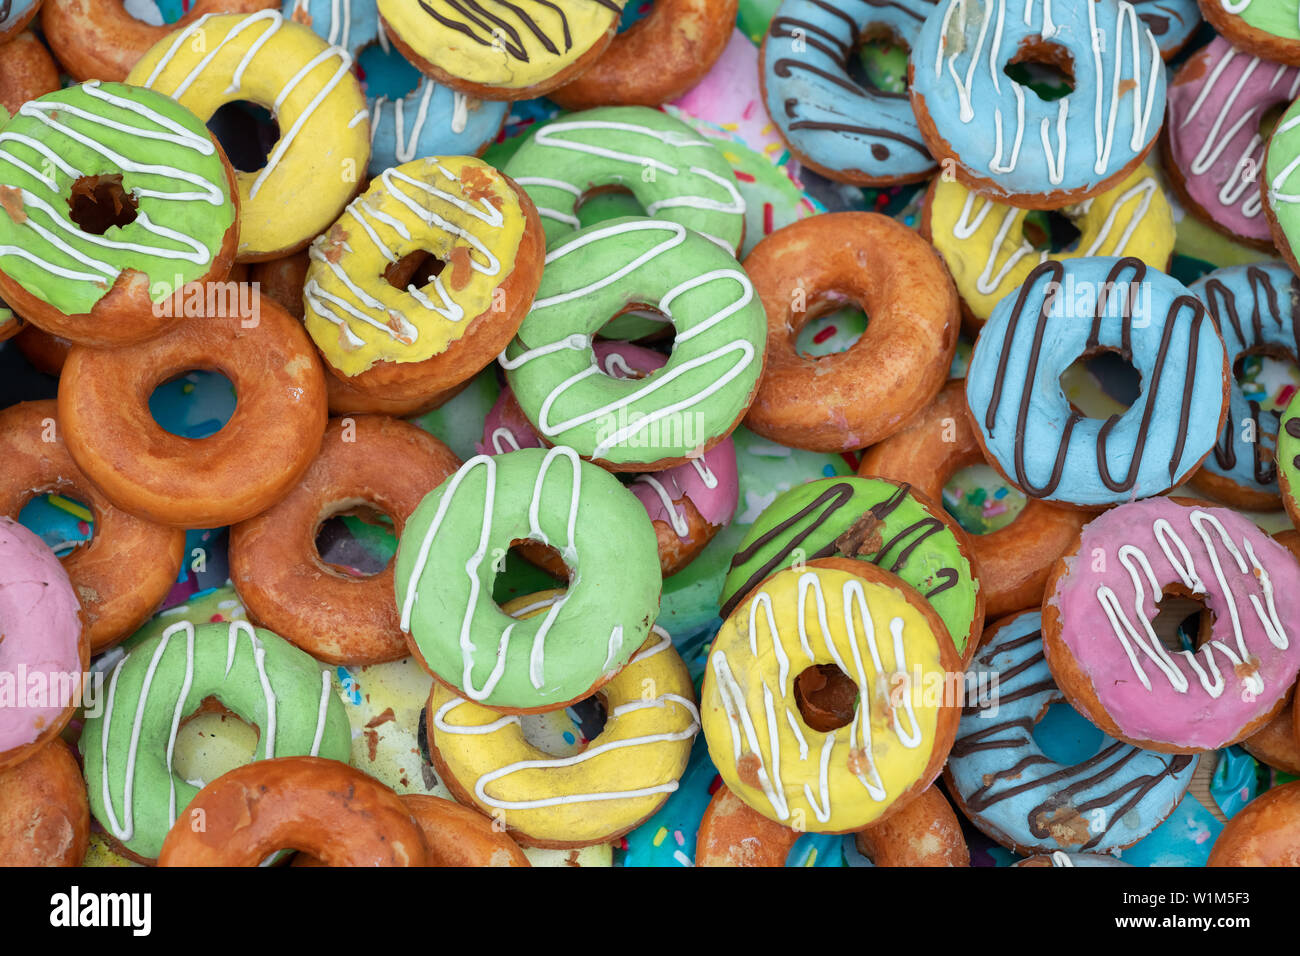 description: Glazed donuts on color background Stock Photo